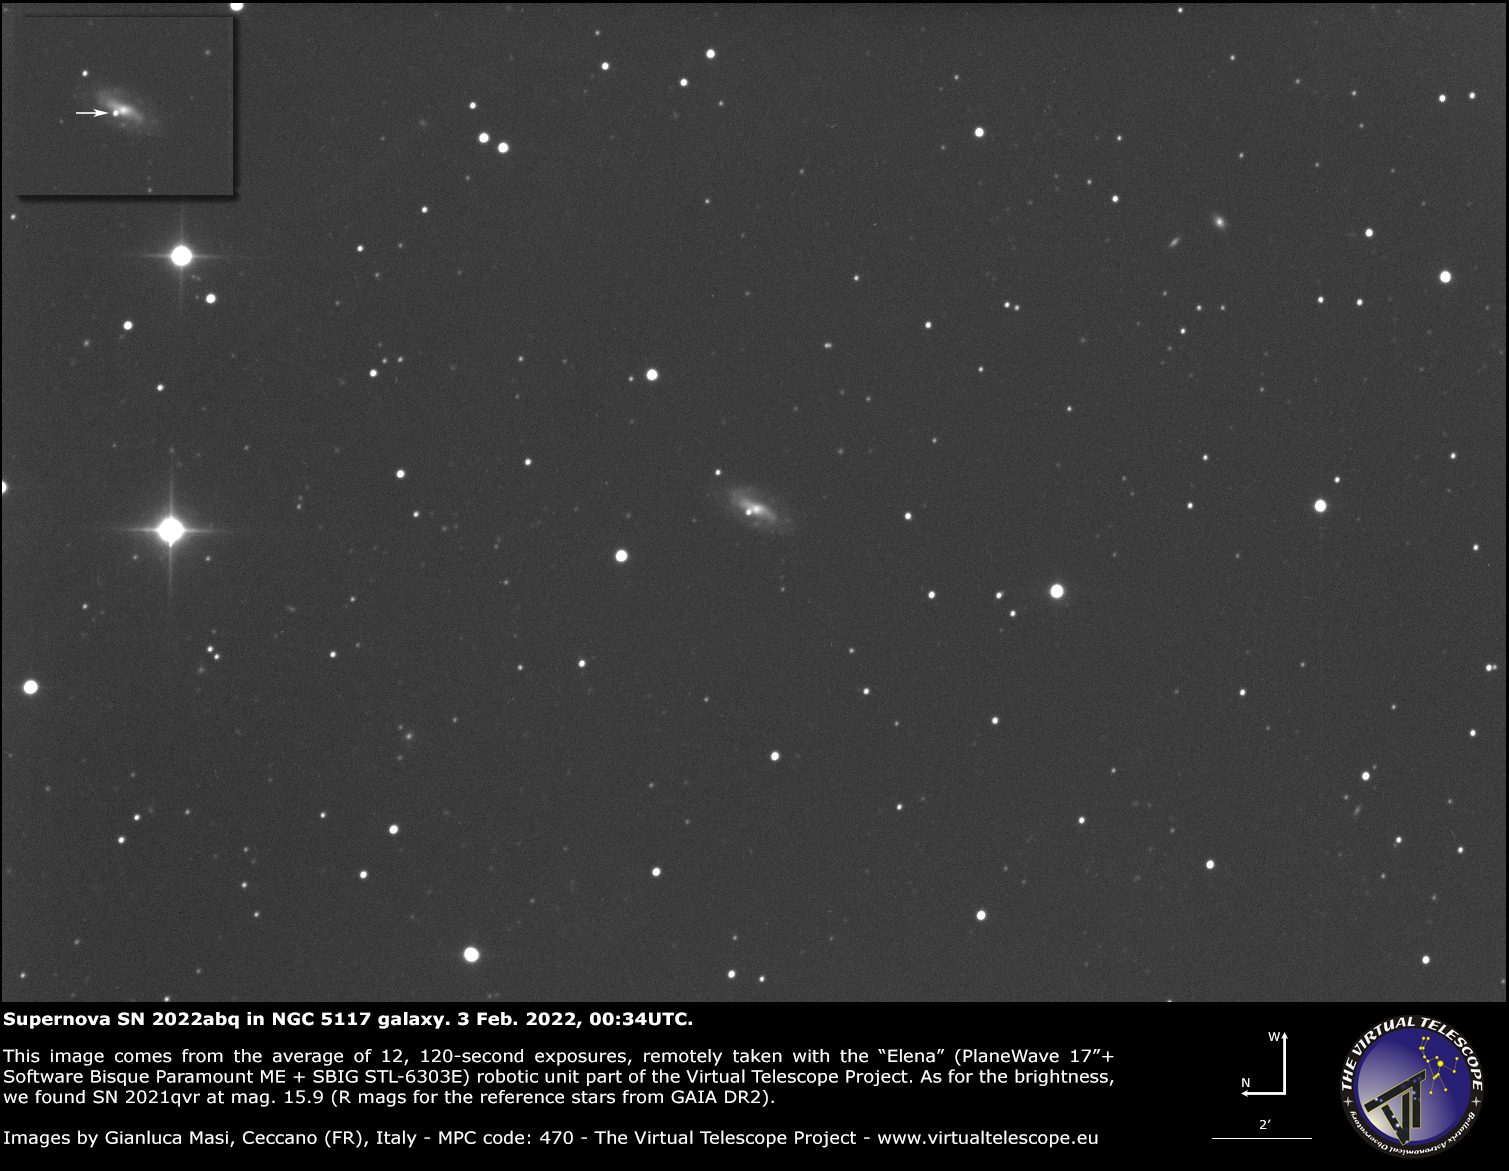 Supernova SN 2022abq in NGC 5117 galaxy: 3 Feb. 2022.